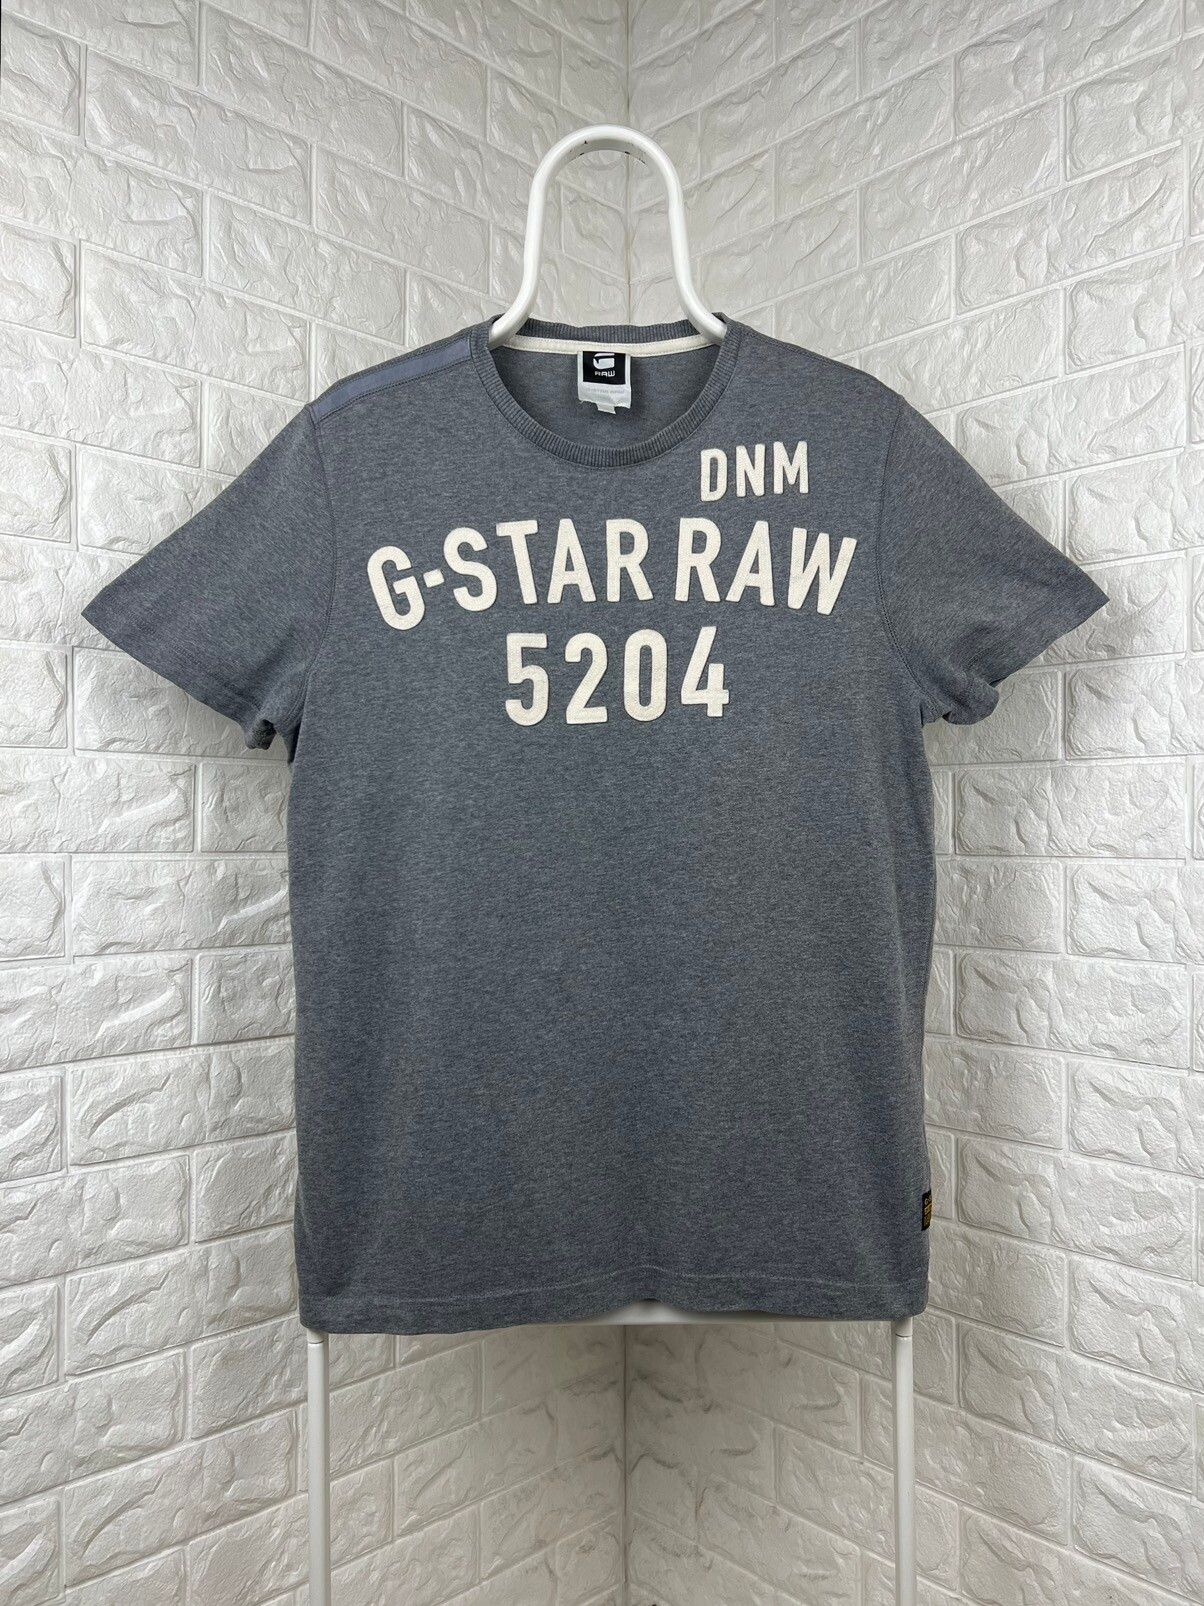 Pre-owned G Star Raw X Gstar G Star Raw Tee Size M In Grey